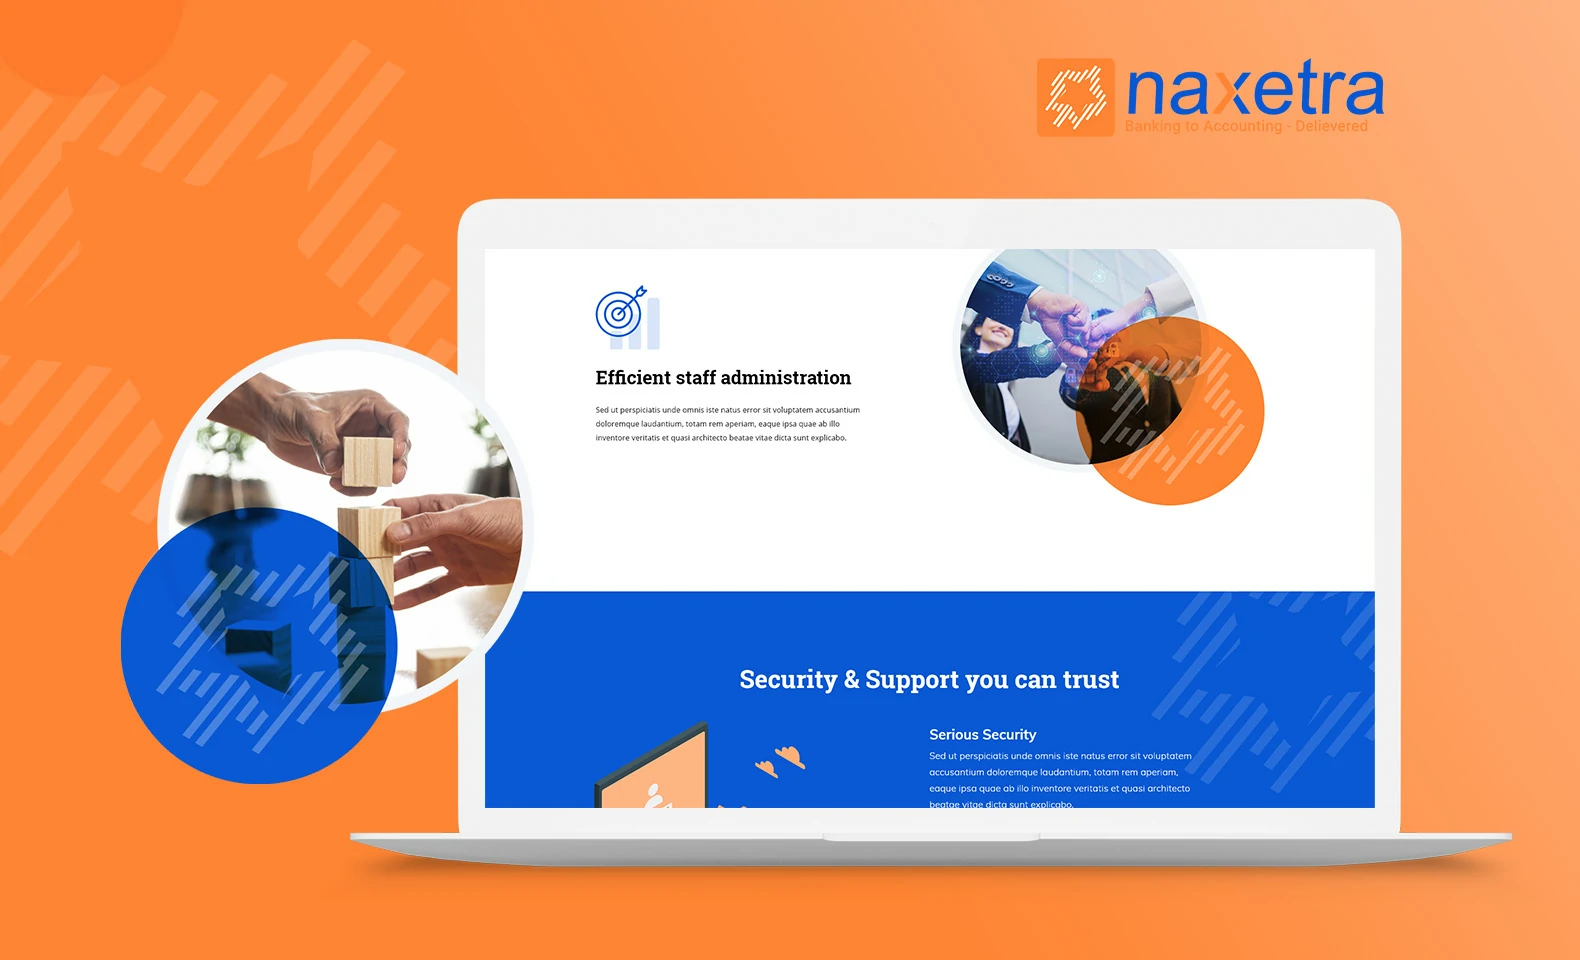 Naxetra Web design work image 2